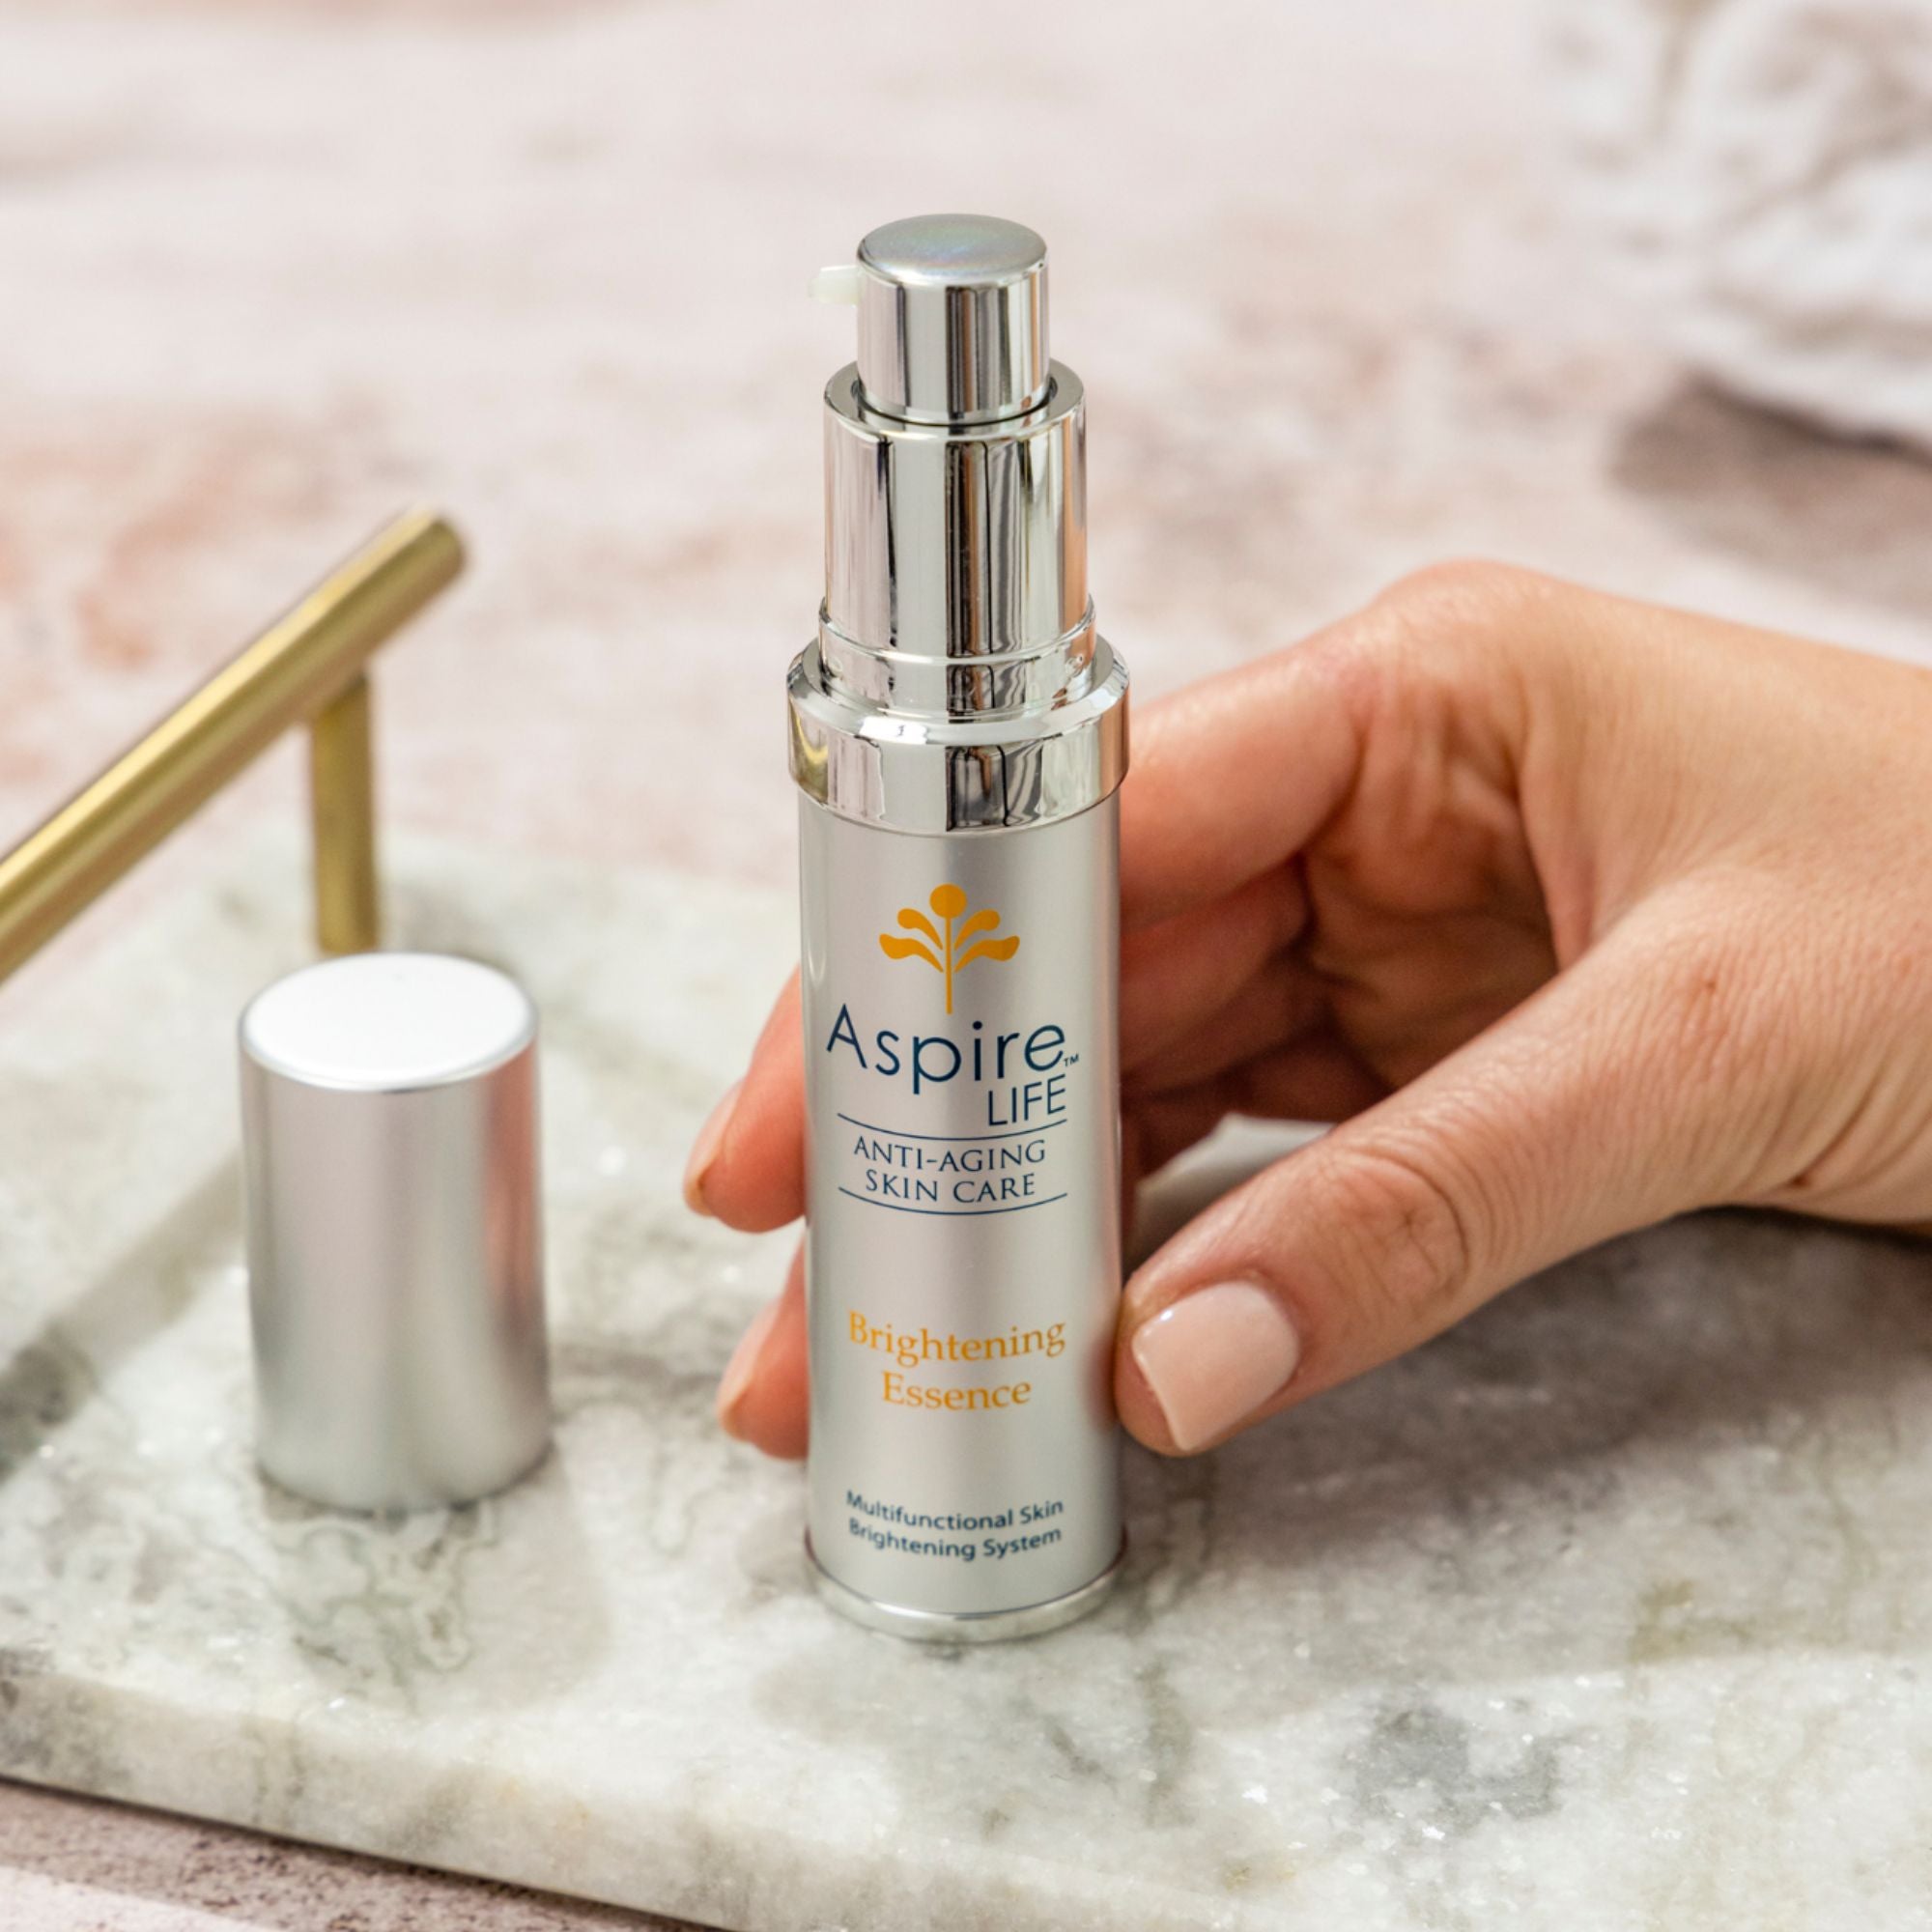 Brightening Essence – AspireLIFE Anti-Aging Skin Care